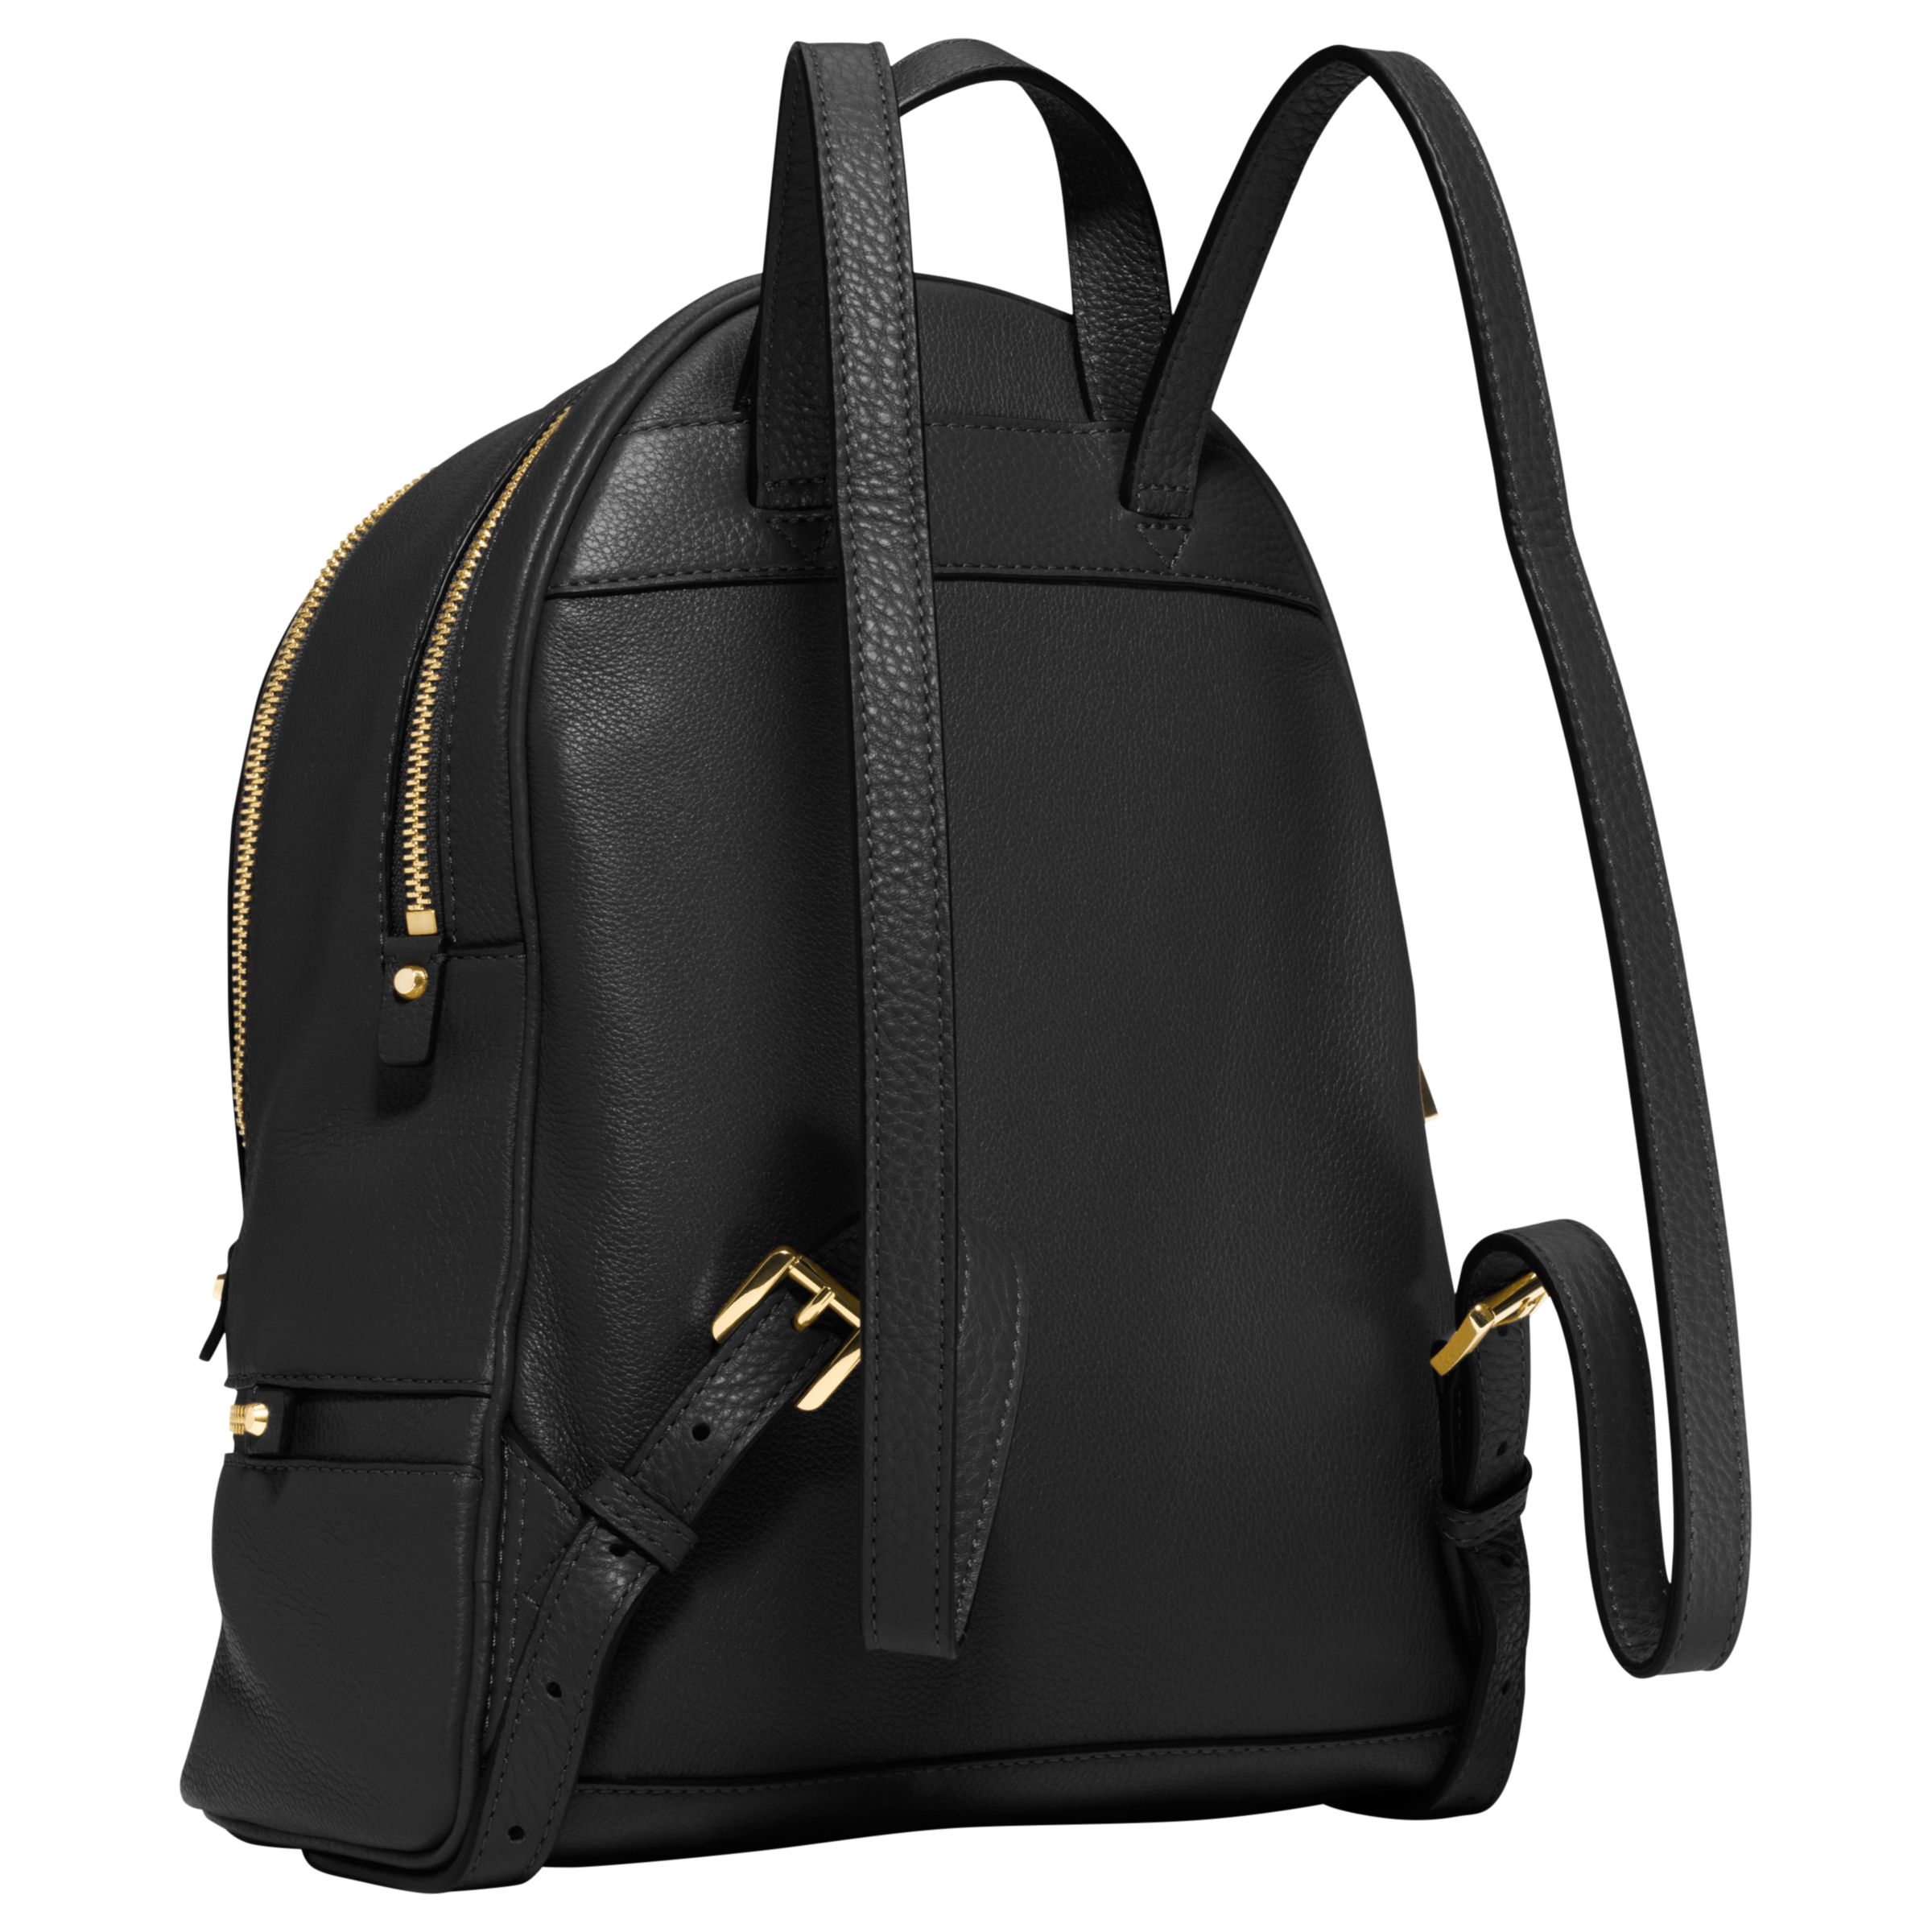 Buy MICHAEL Michael Kors Rhea Leather Backpack Online at johnlewis.com